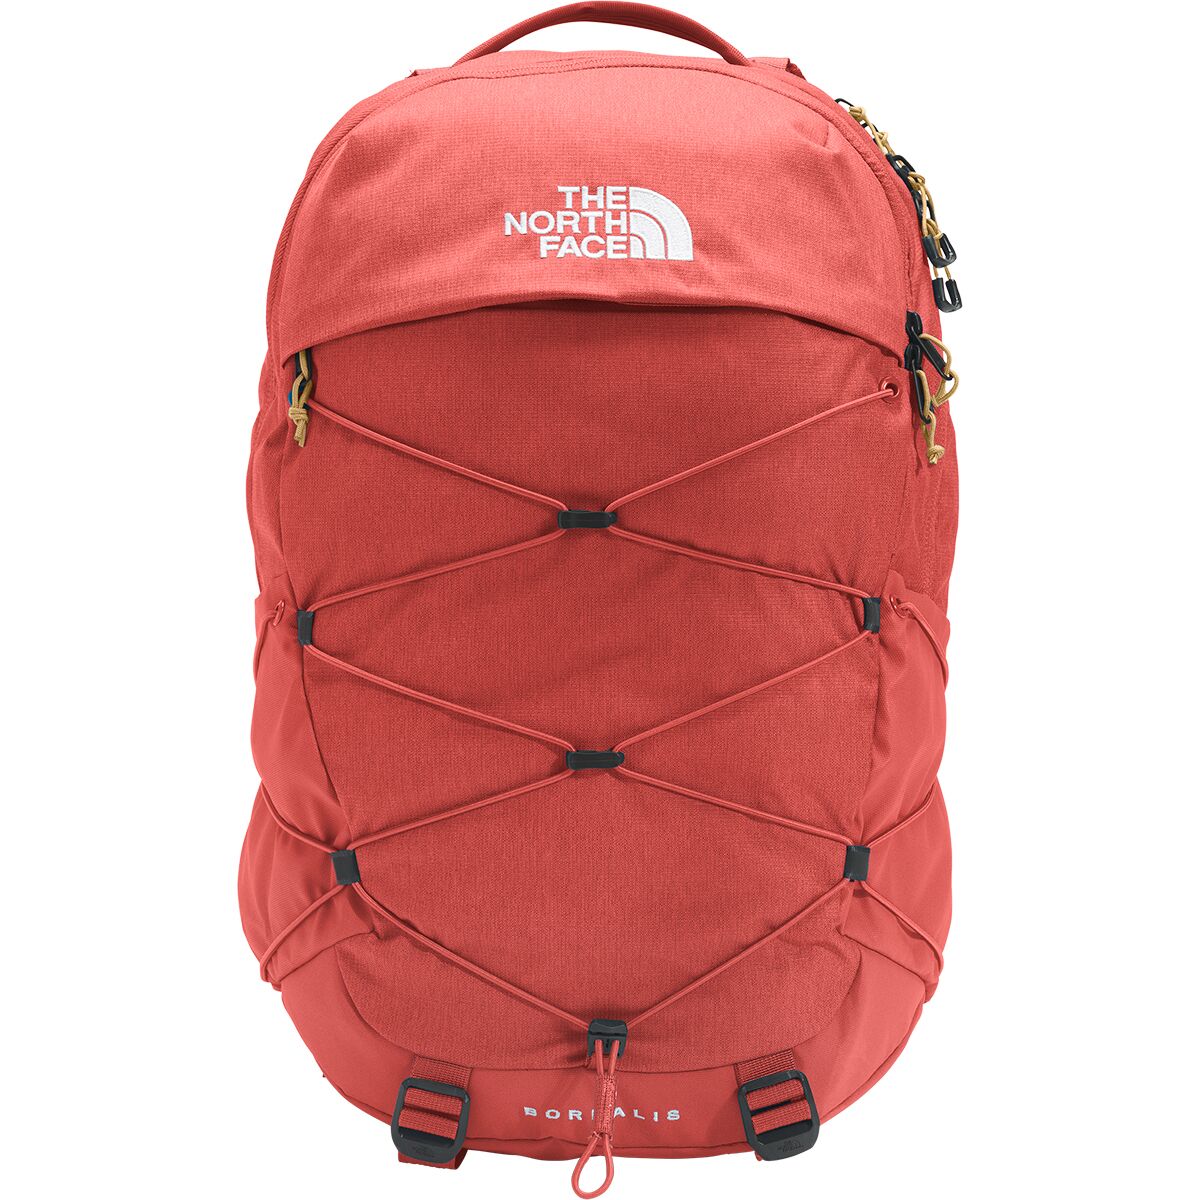 Tien aanklager Bewijzen The North Face Borealis 28L Backpack - Accessories